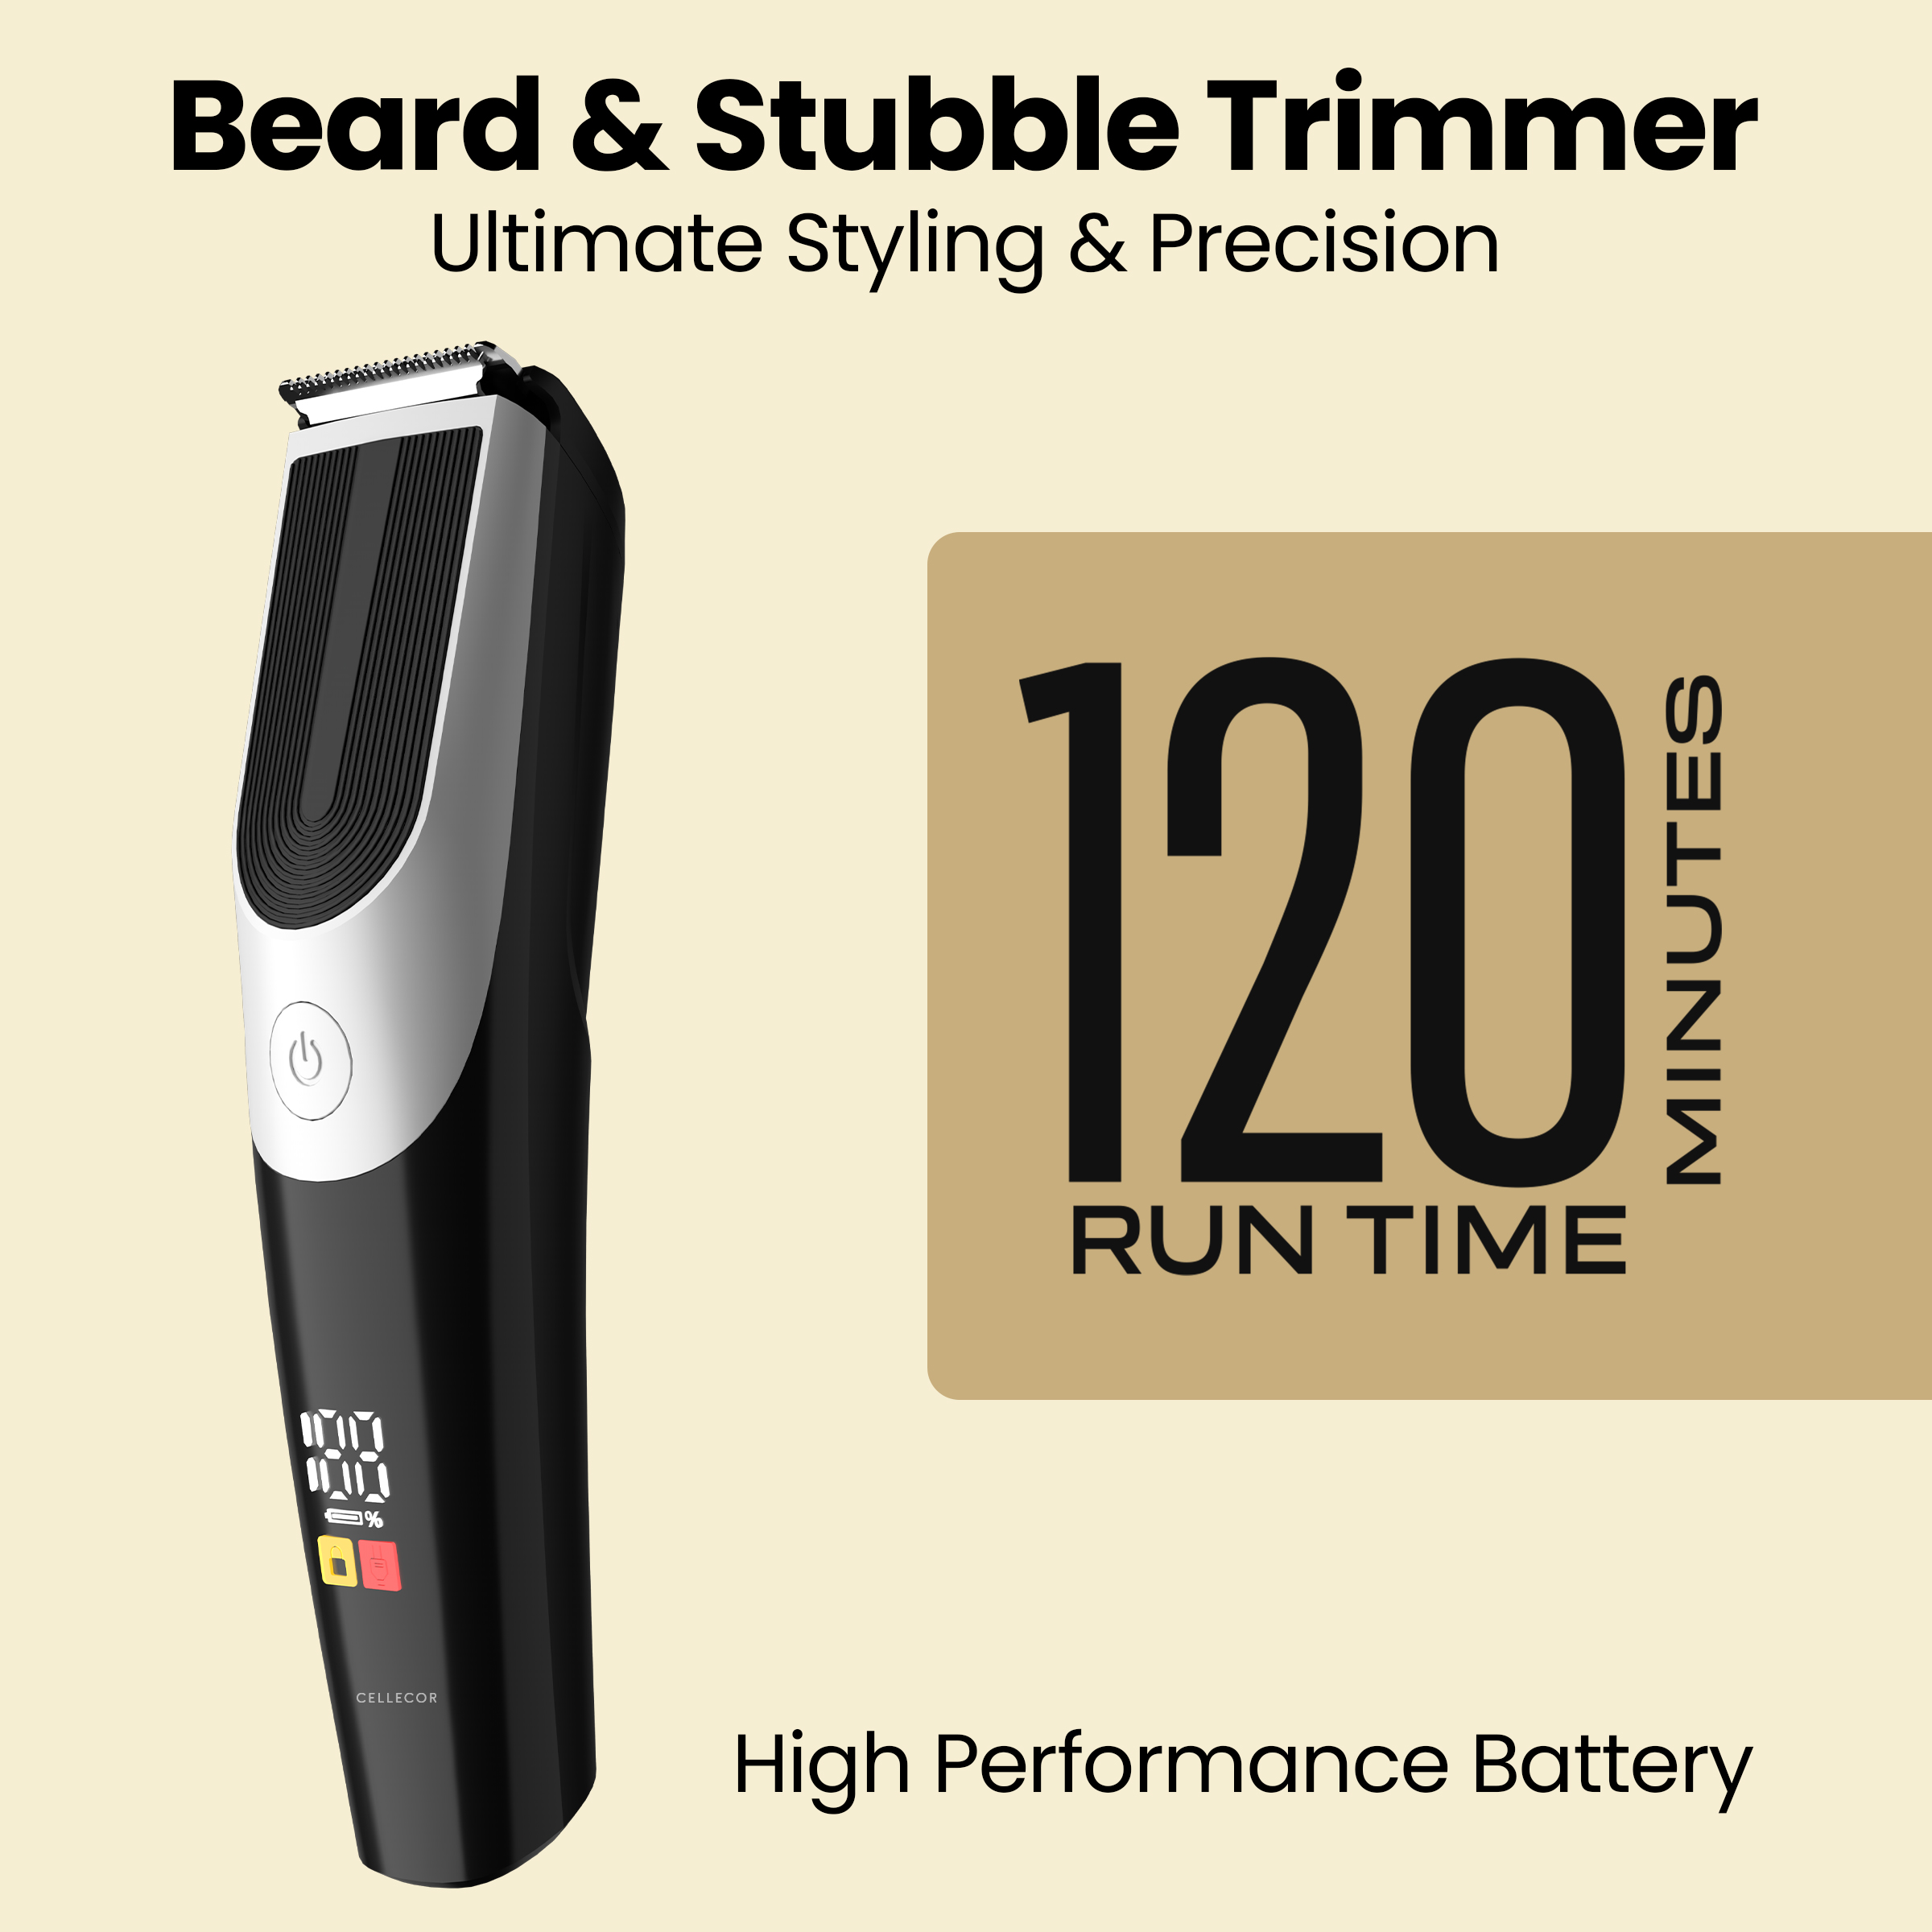 CELLECOR Hair Trimmer- ACUTE 800mAh li-ion | type c charging| 120min runtime| 7 length settings| self sharpening blades| washable head| digital battery display